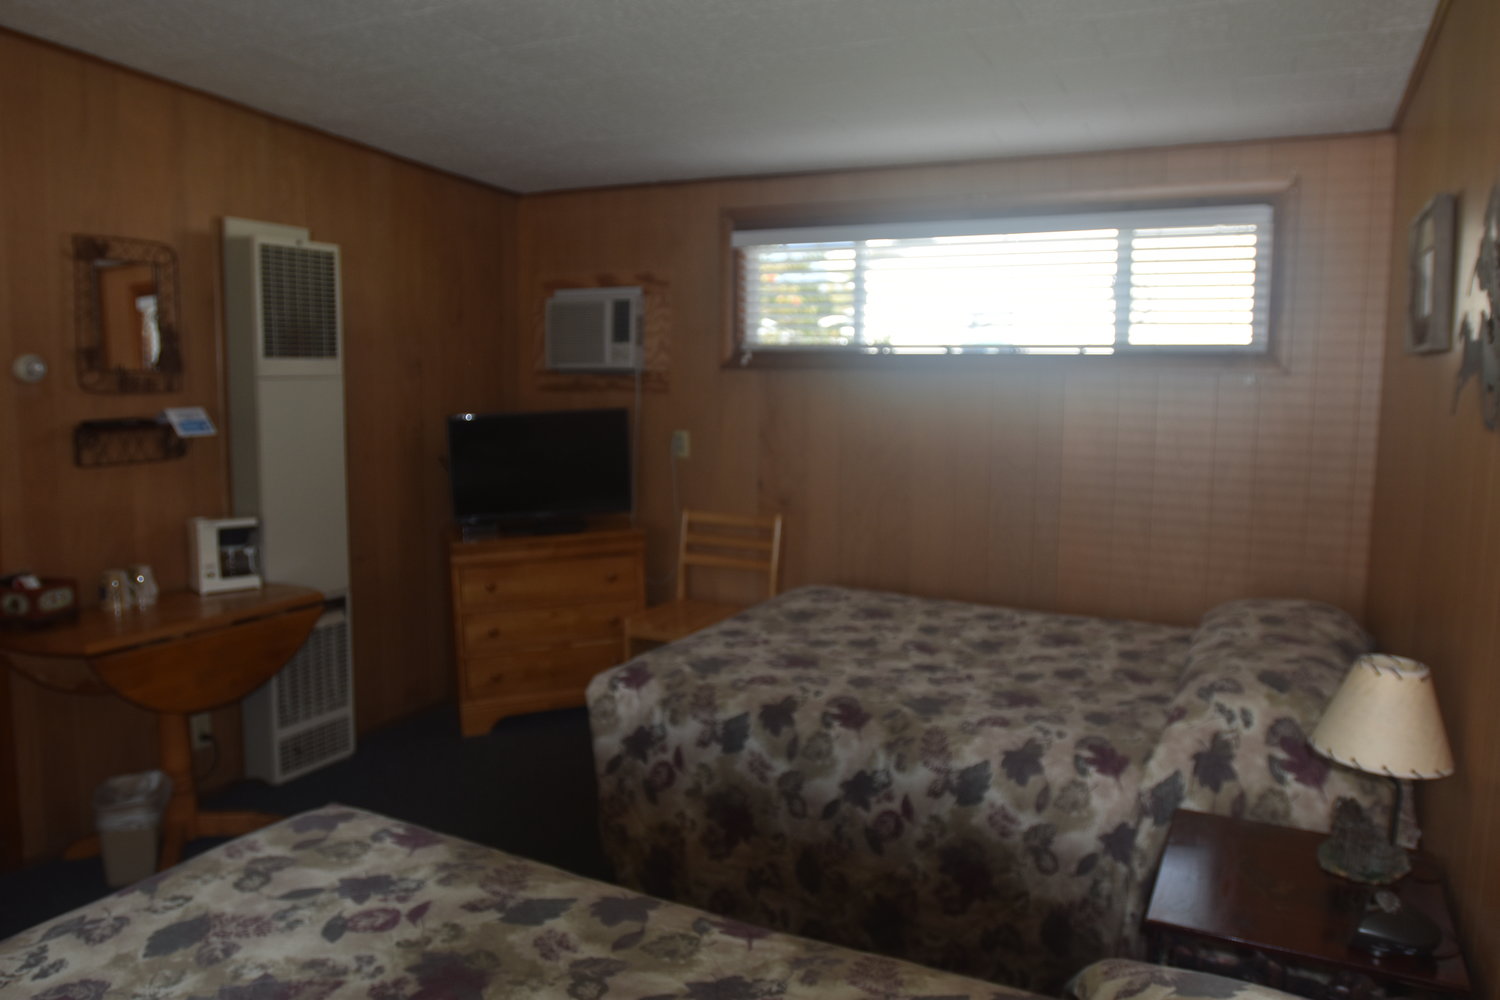 Blue Spruce Motel - Port Austin - Room Number 2 - Interior with TV.jpeg